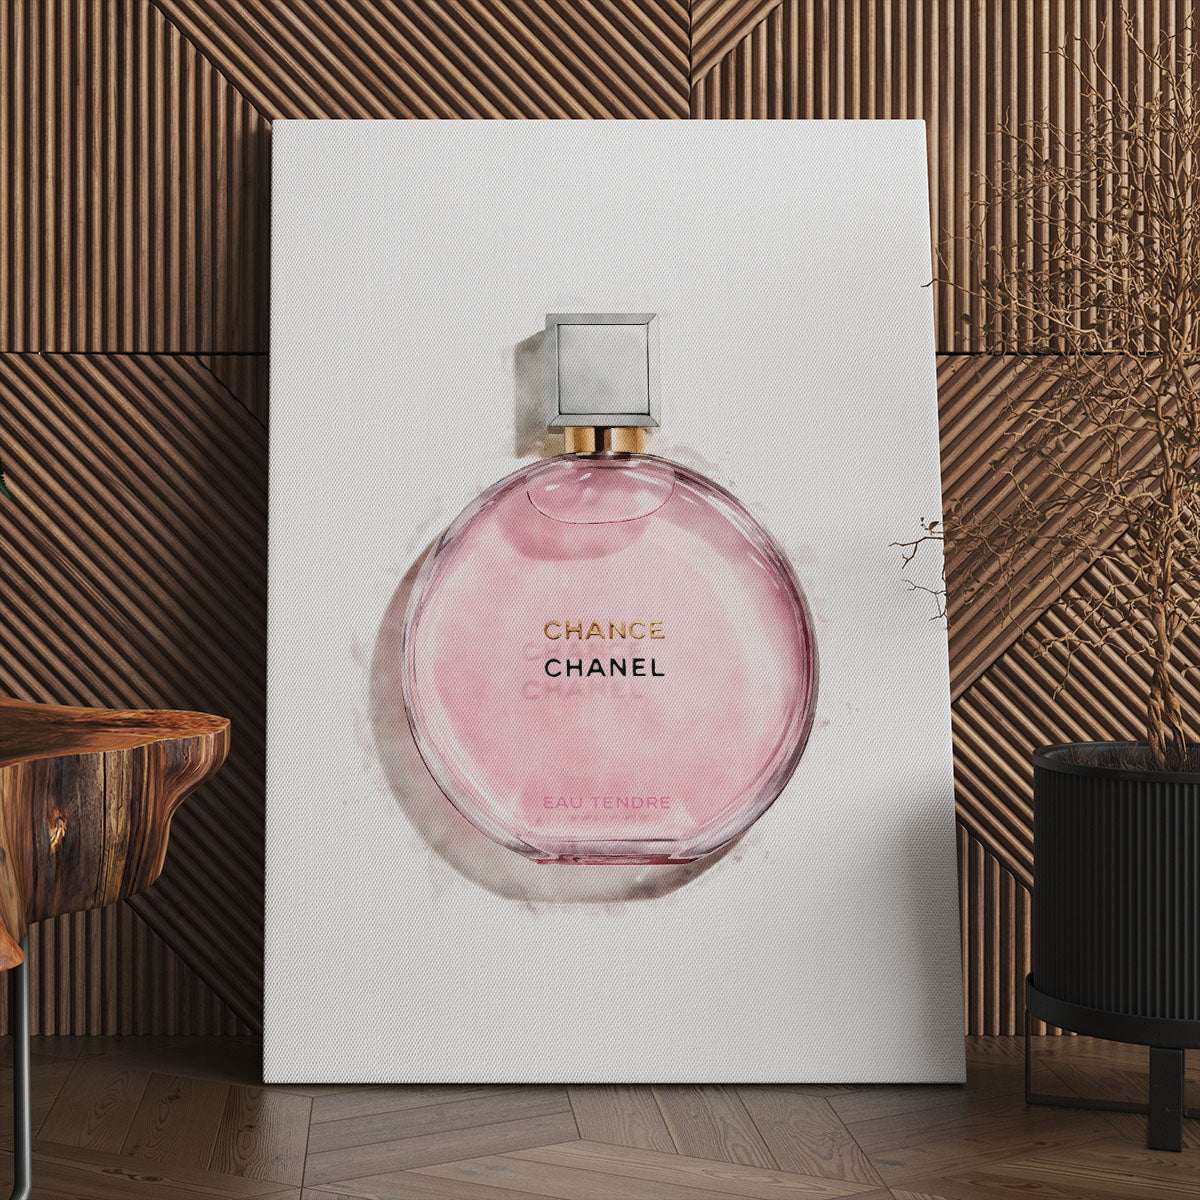 Chanel Bottle Flowers Pink 14 x 18 Framed Print